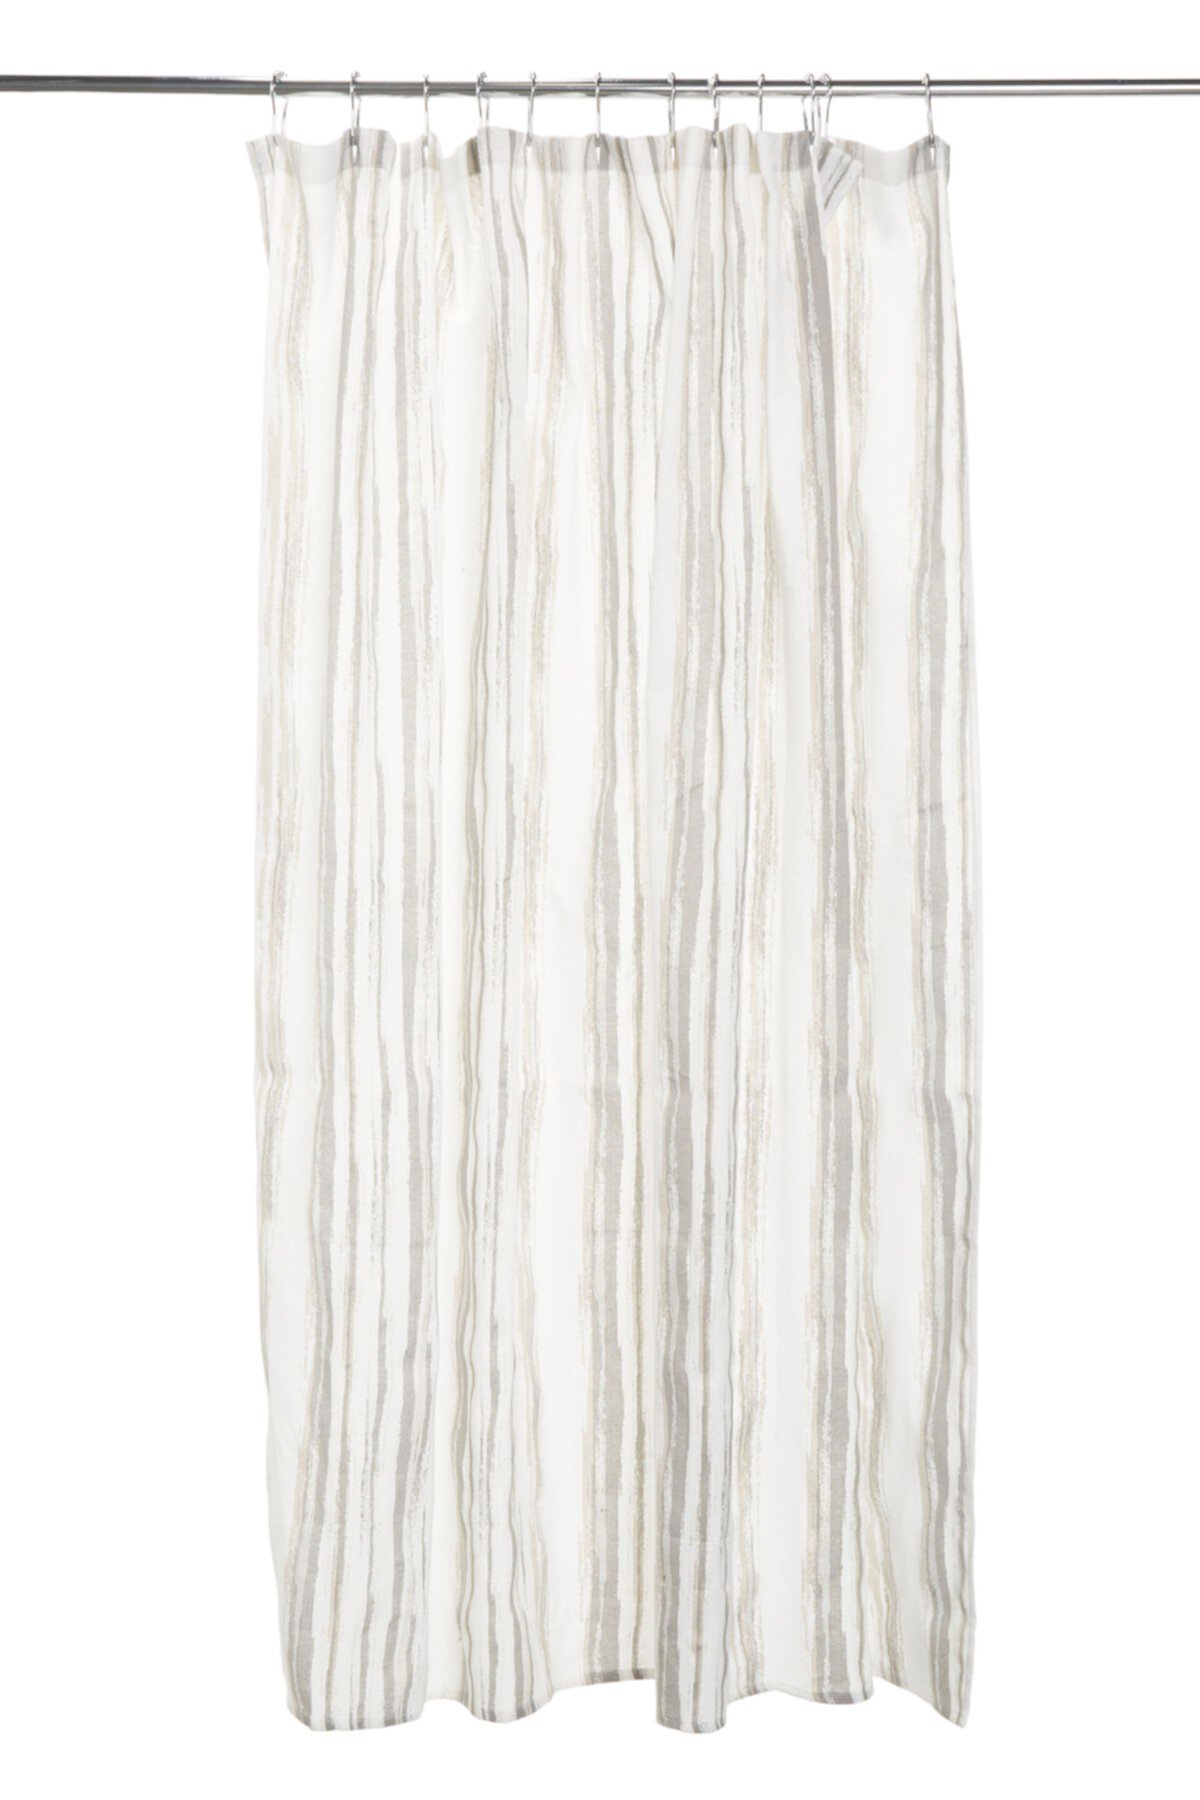 Whispering Stripe Shower Curtain - White/Grey BCBGeneration